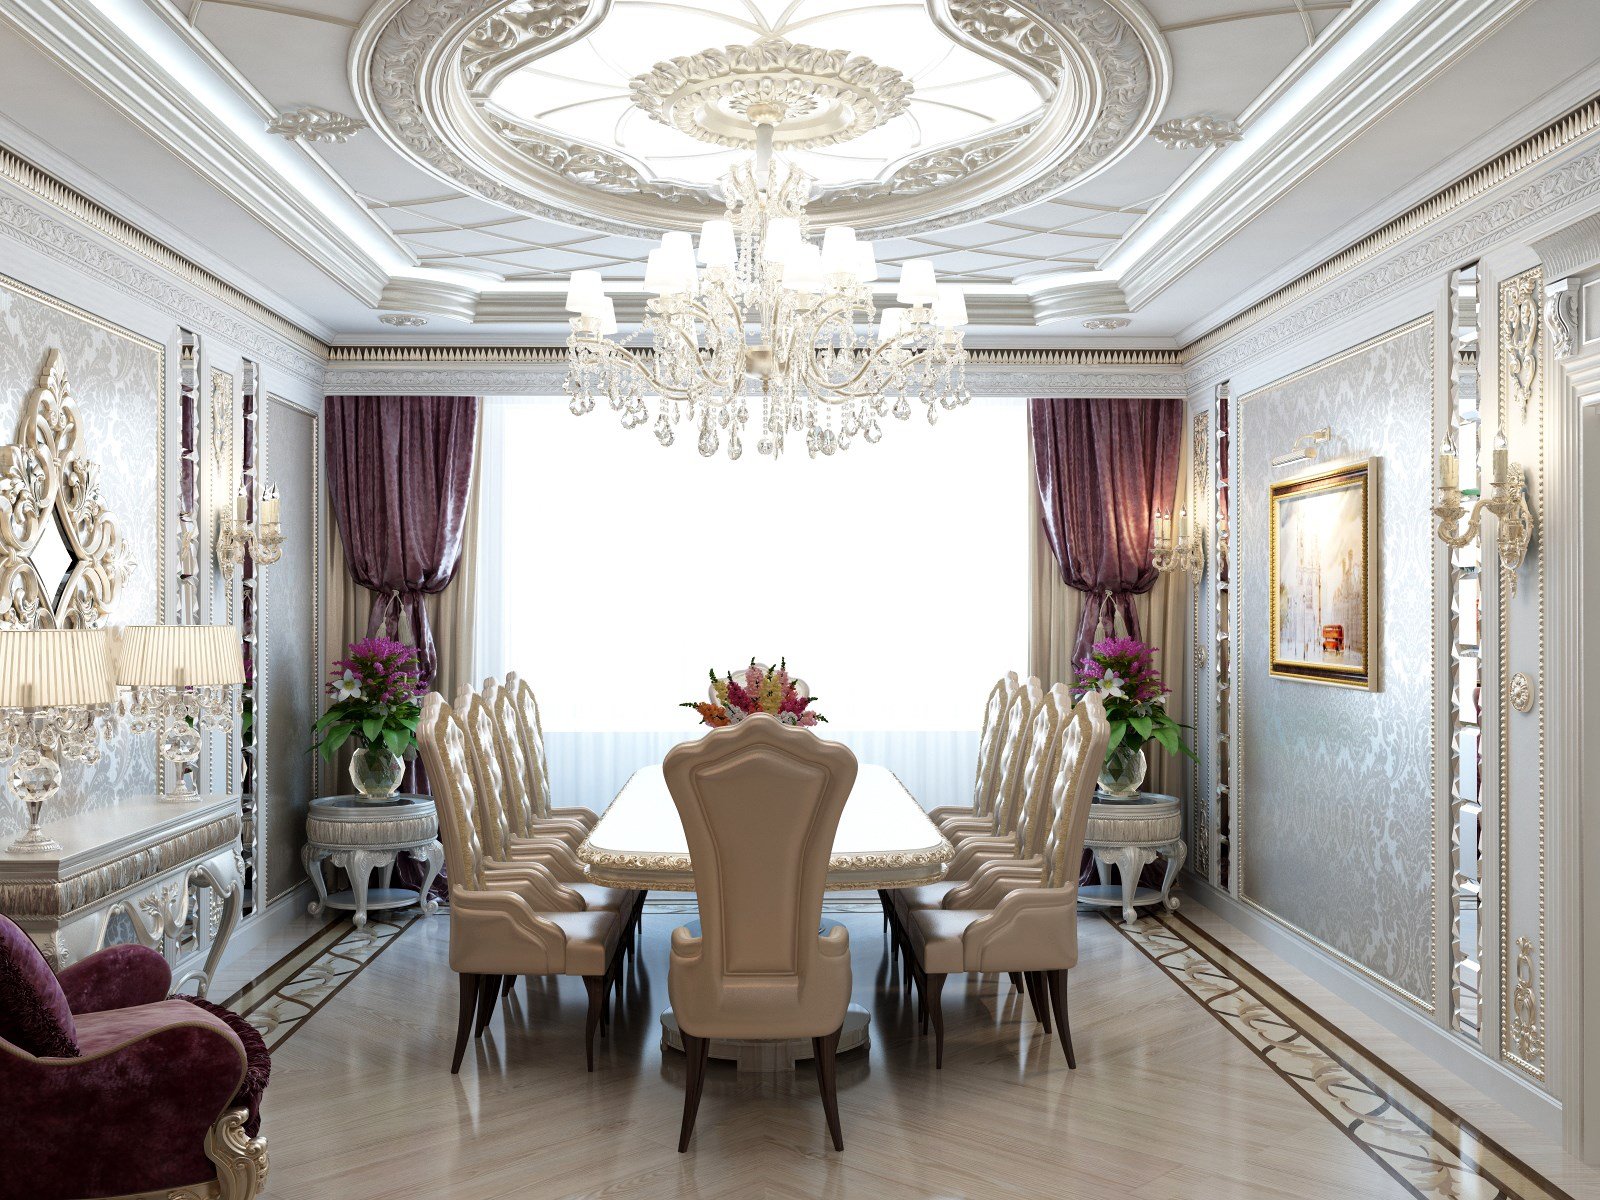 Antonovich Design Luxury квартиры